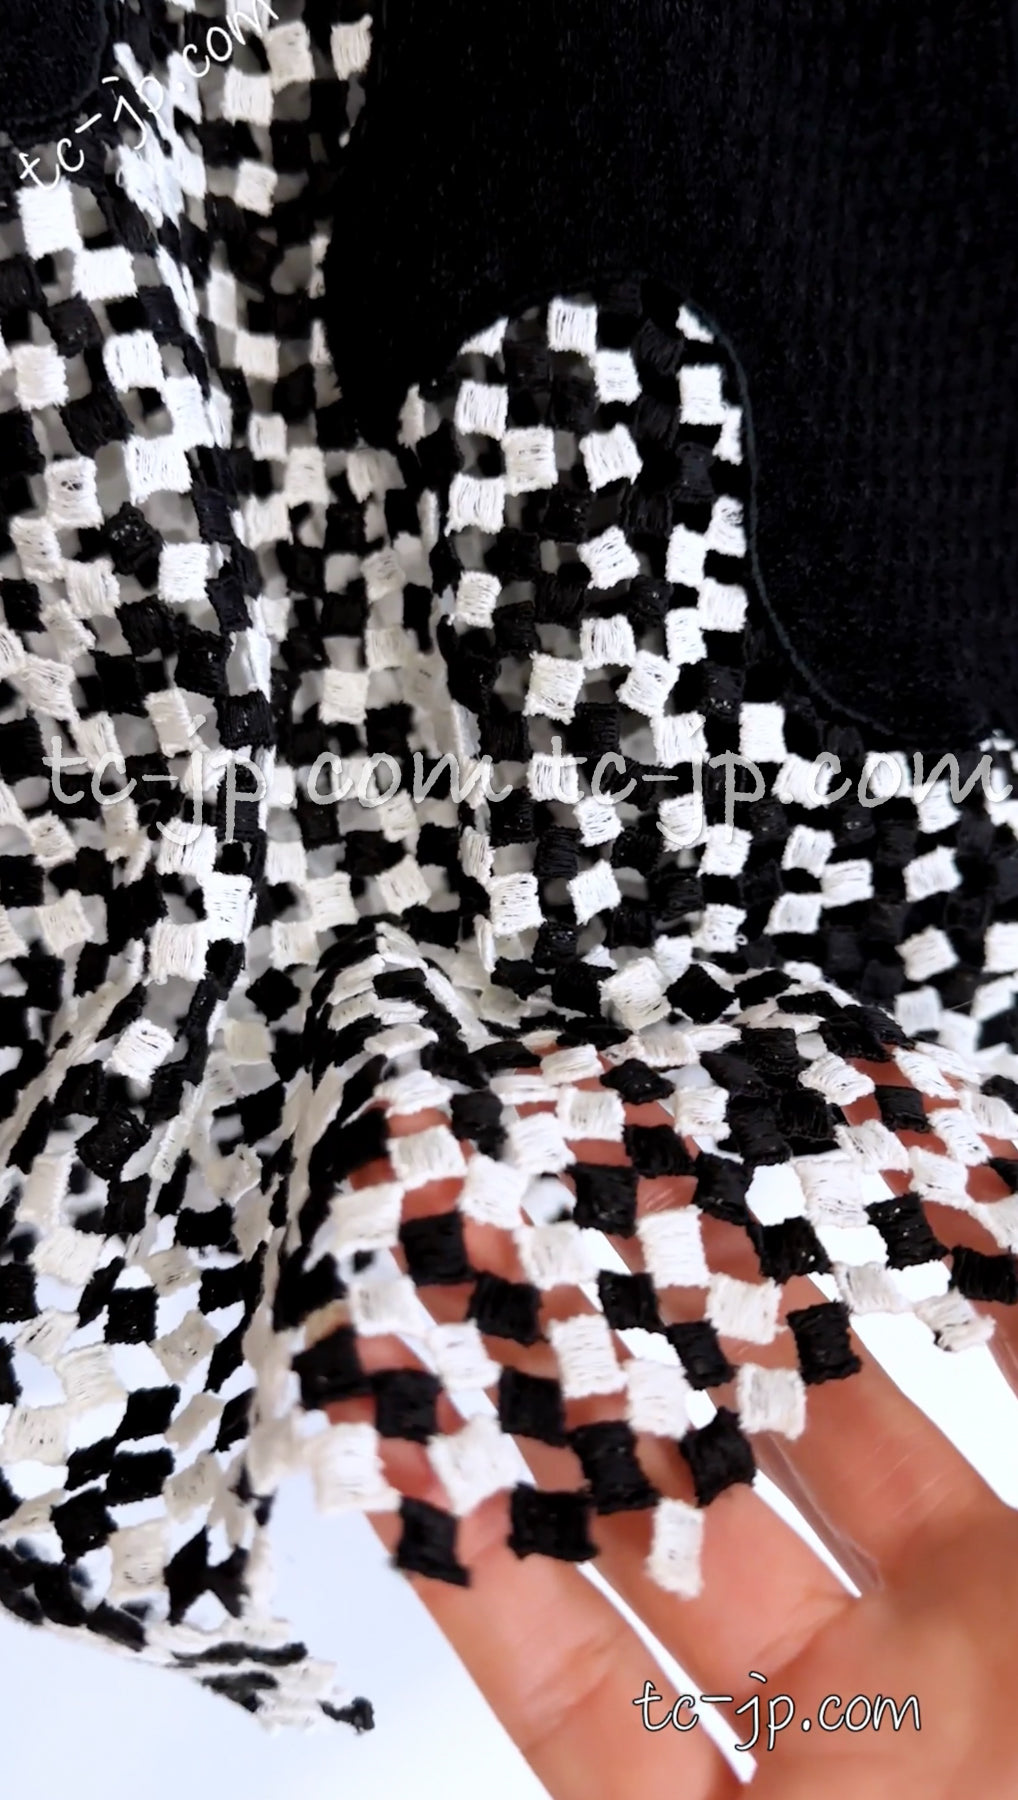 CHANEL 11S Cameron Diaz Black White Lace Cardigan Jacket Dress Tops 34 36 38 44 シャネル ブラック・ホワイト・レース・カーディガン・ジャケット・ワンピース・トップス 即発 - TC JAPAN